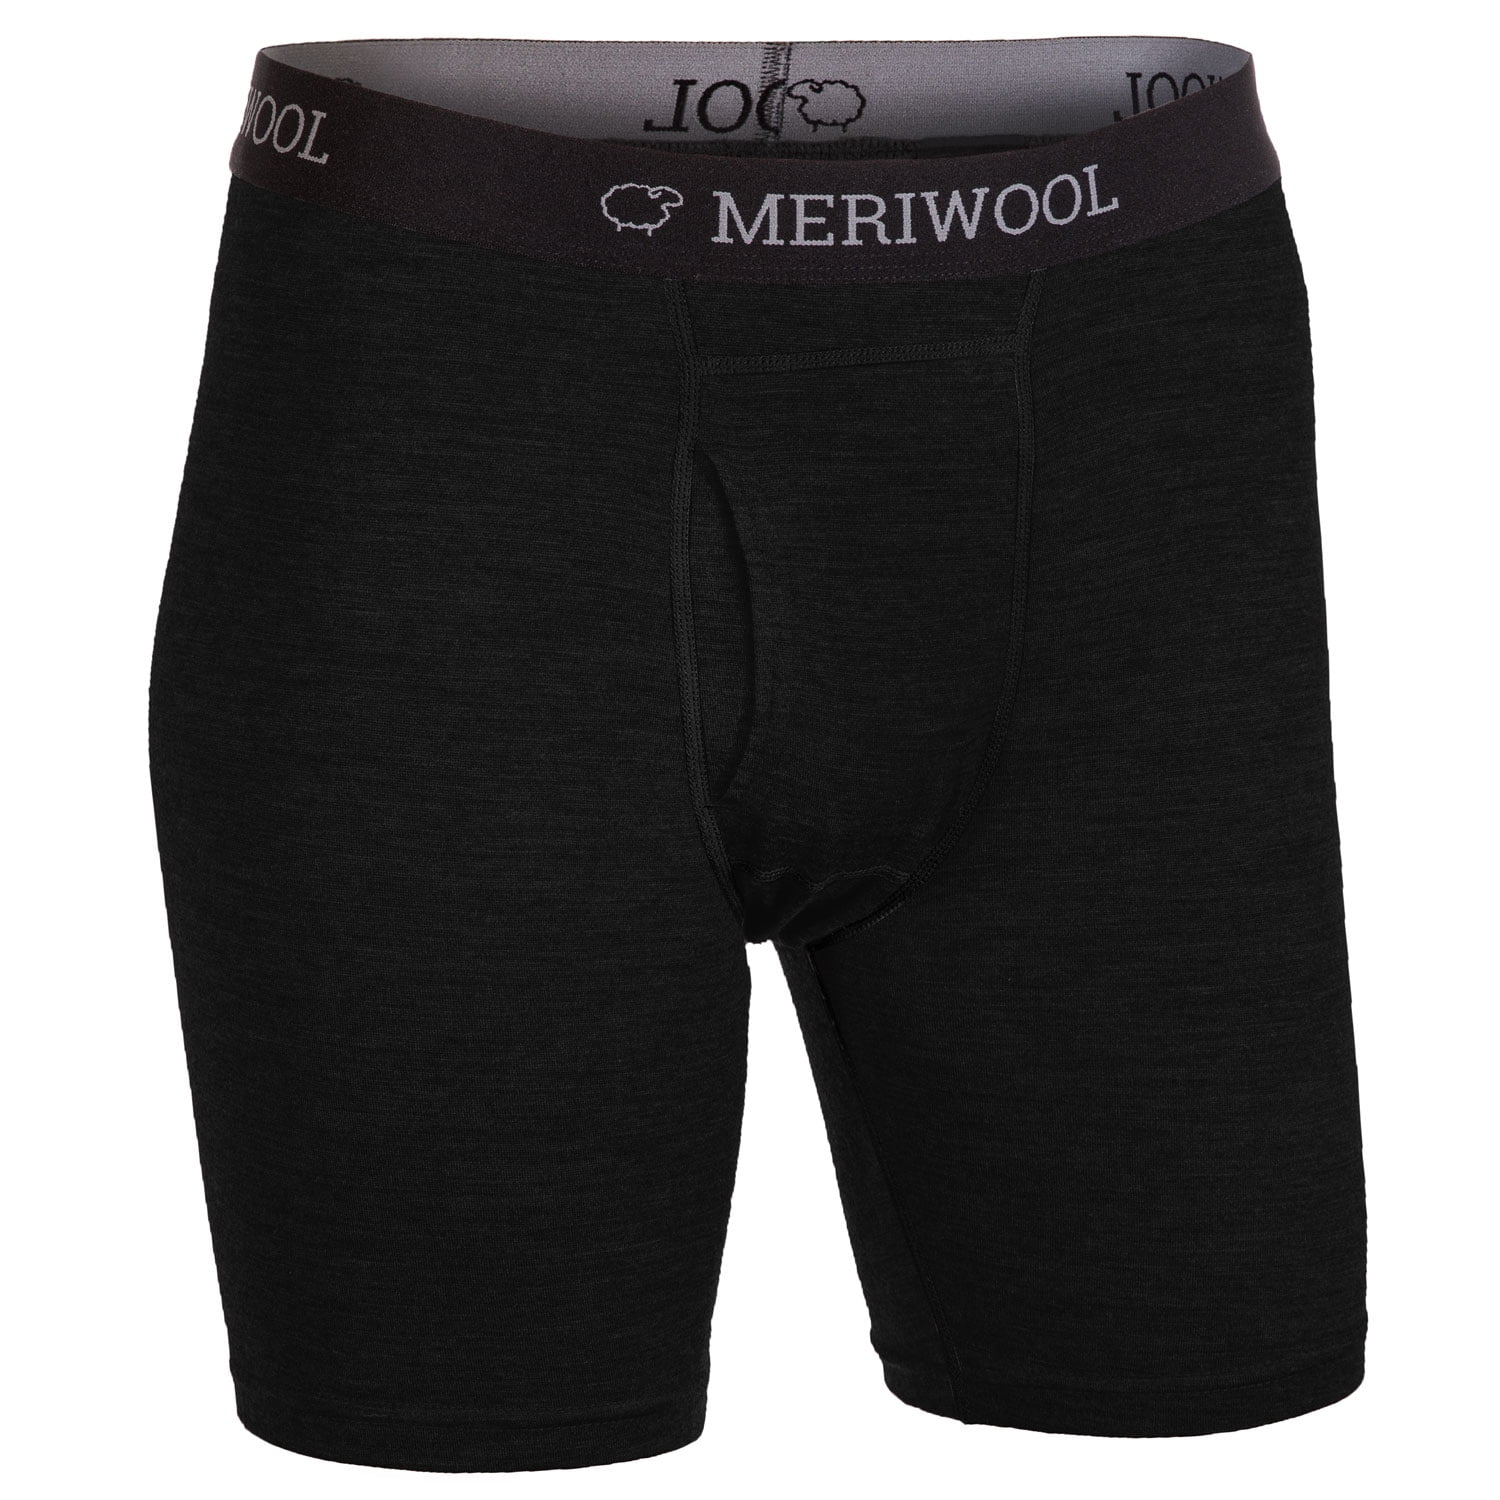 THERMOWAVE - MERINO LIFE / Mens Merino Wool Boxer Briefs / Black